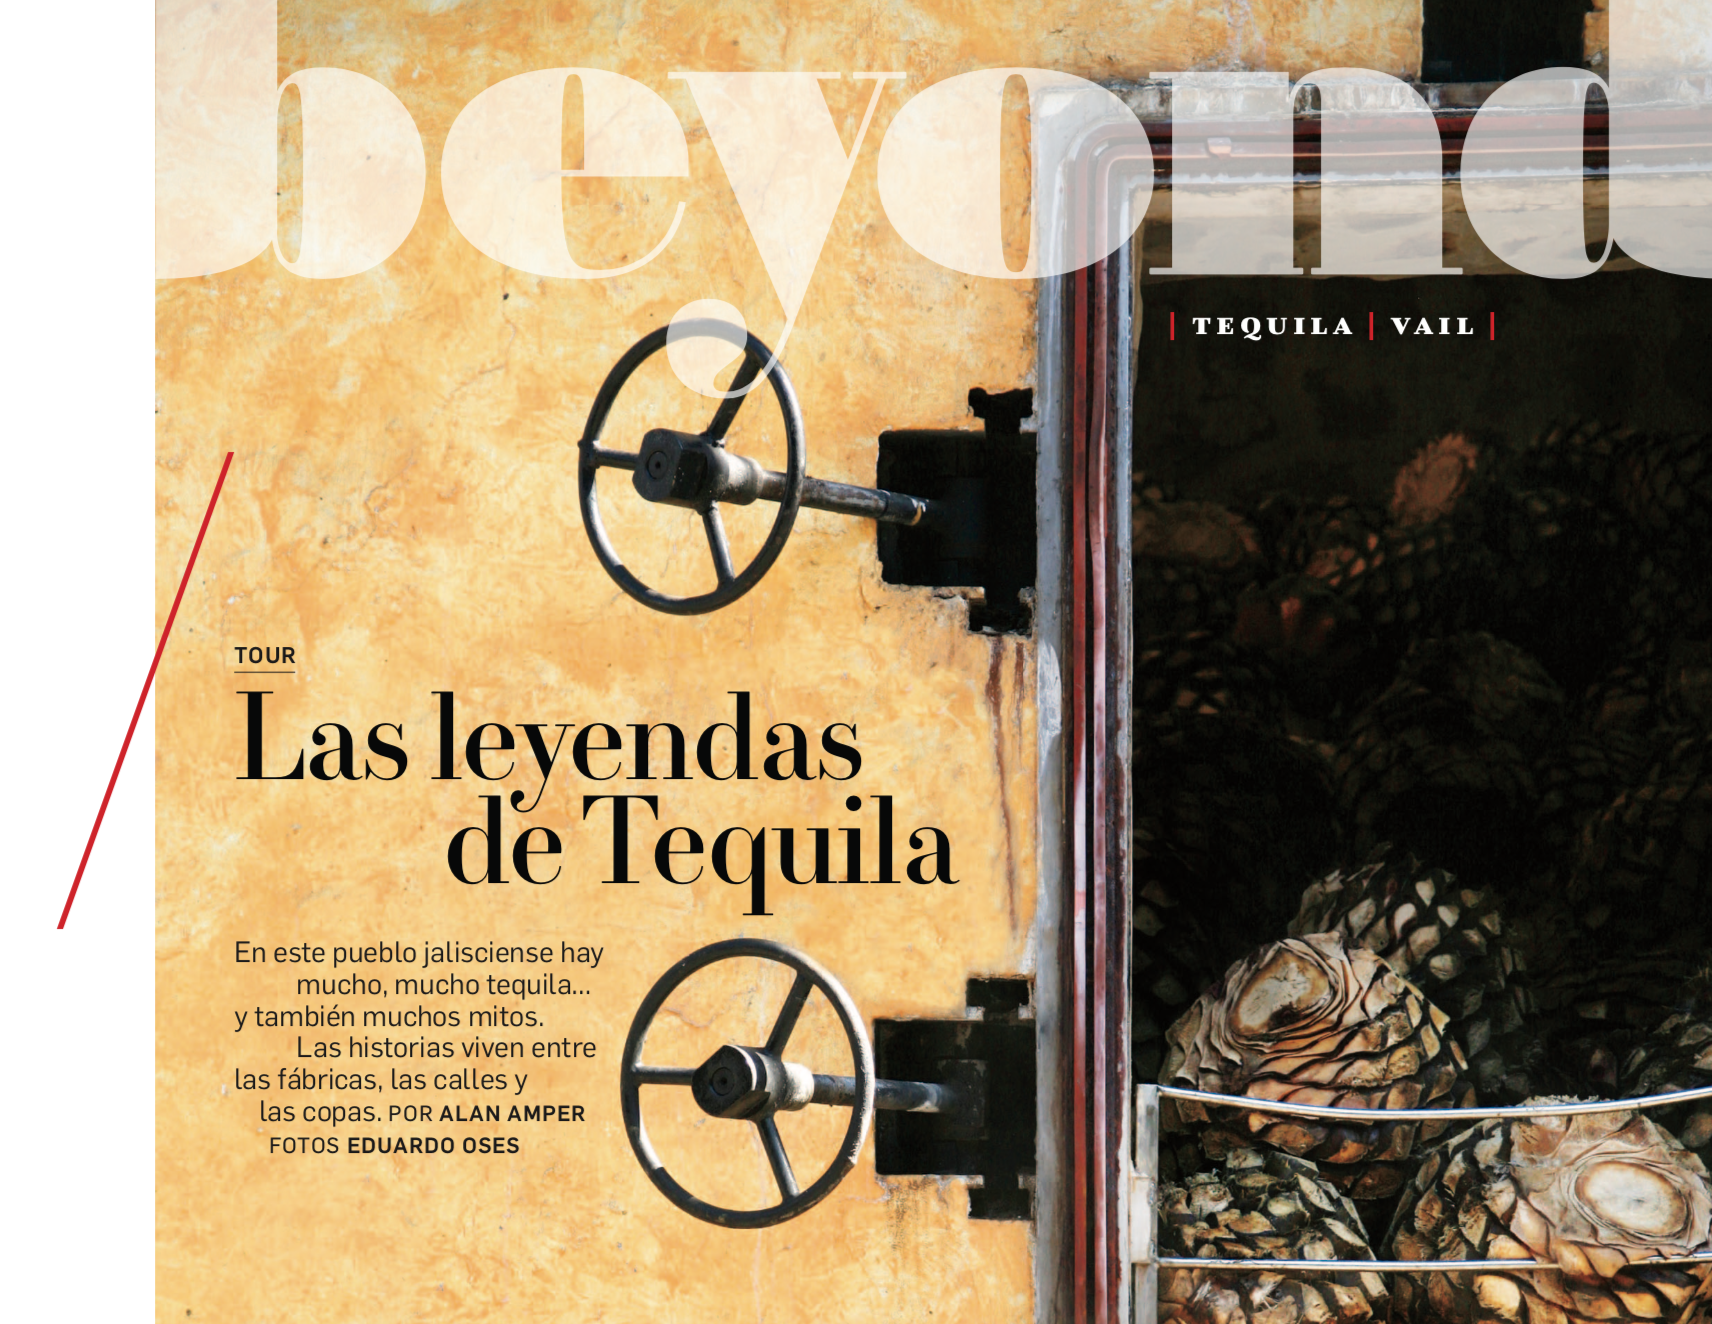 Travel + Leisure – Las leyendas de Tequila